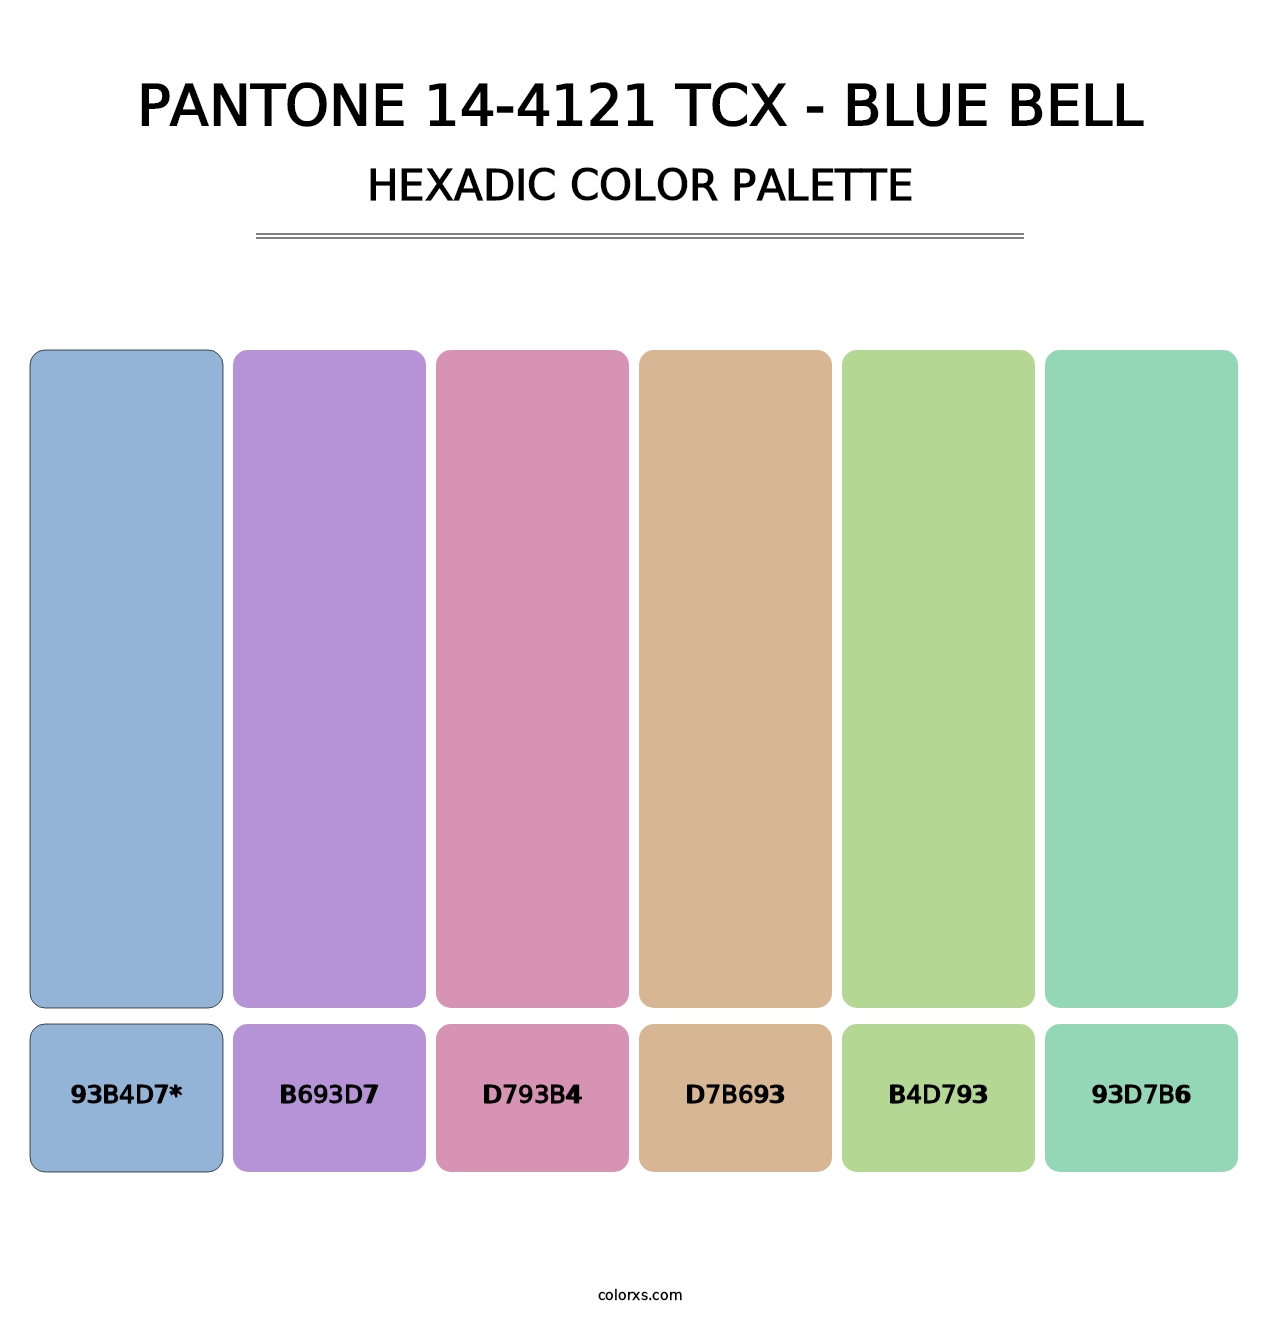 PANTONE 14-4121 TCX - Blue Bell - Hexadic Color Palette